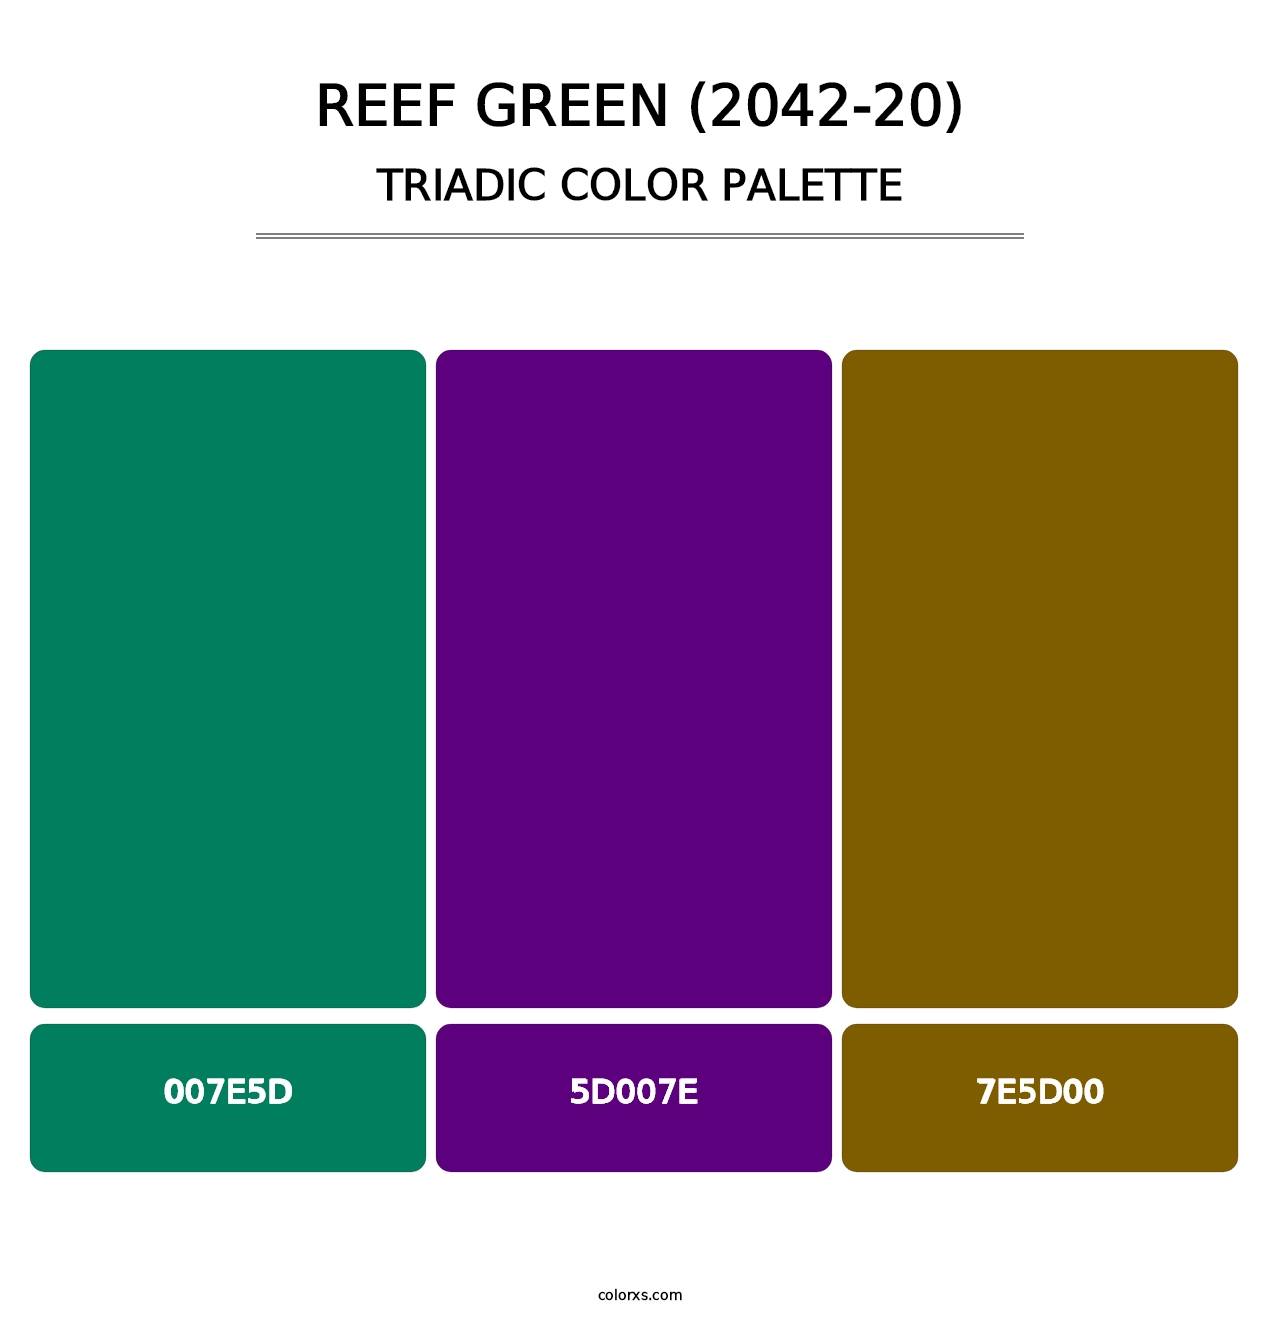 Reef Green (2042-20) - Triadic Color Palette